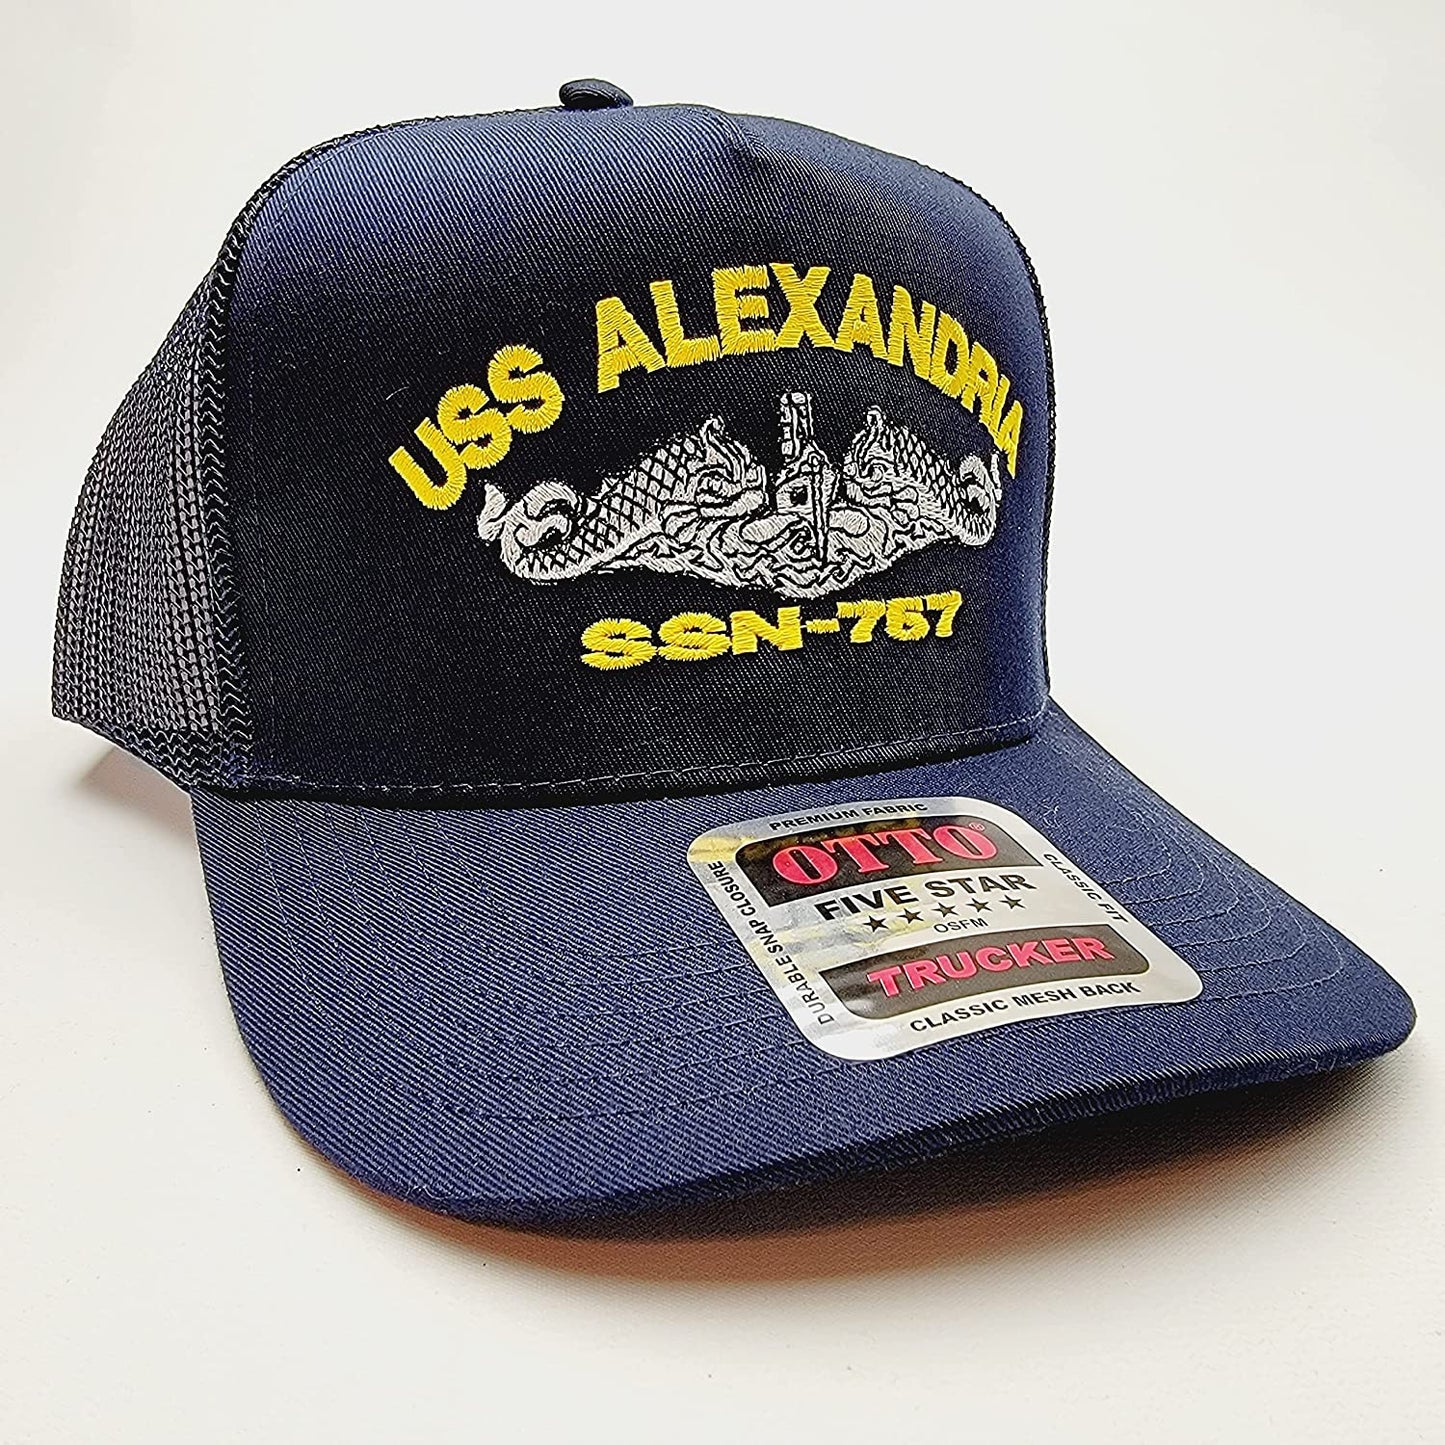 US NAVY USS ALEXANDRIA SSN-757 Embroidered Hat Baseball Cap Adjustable Blue